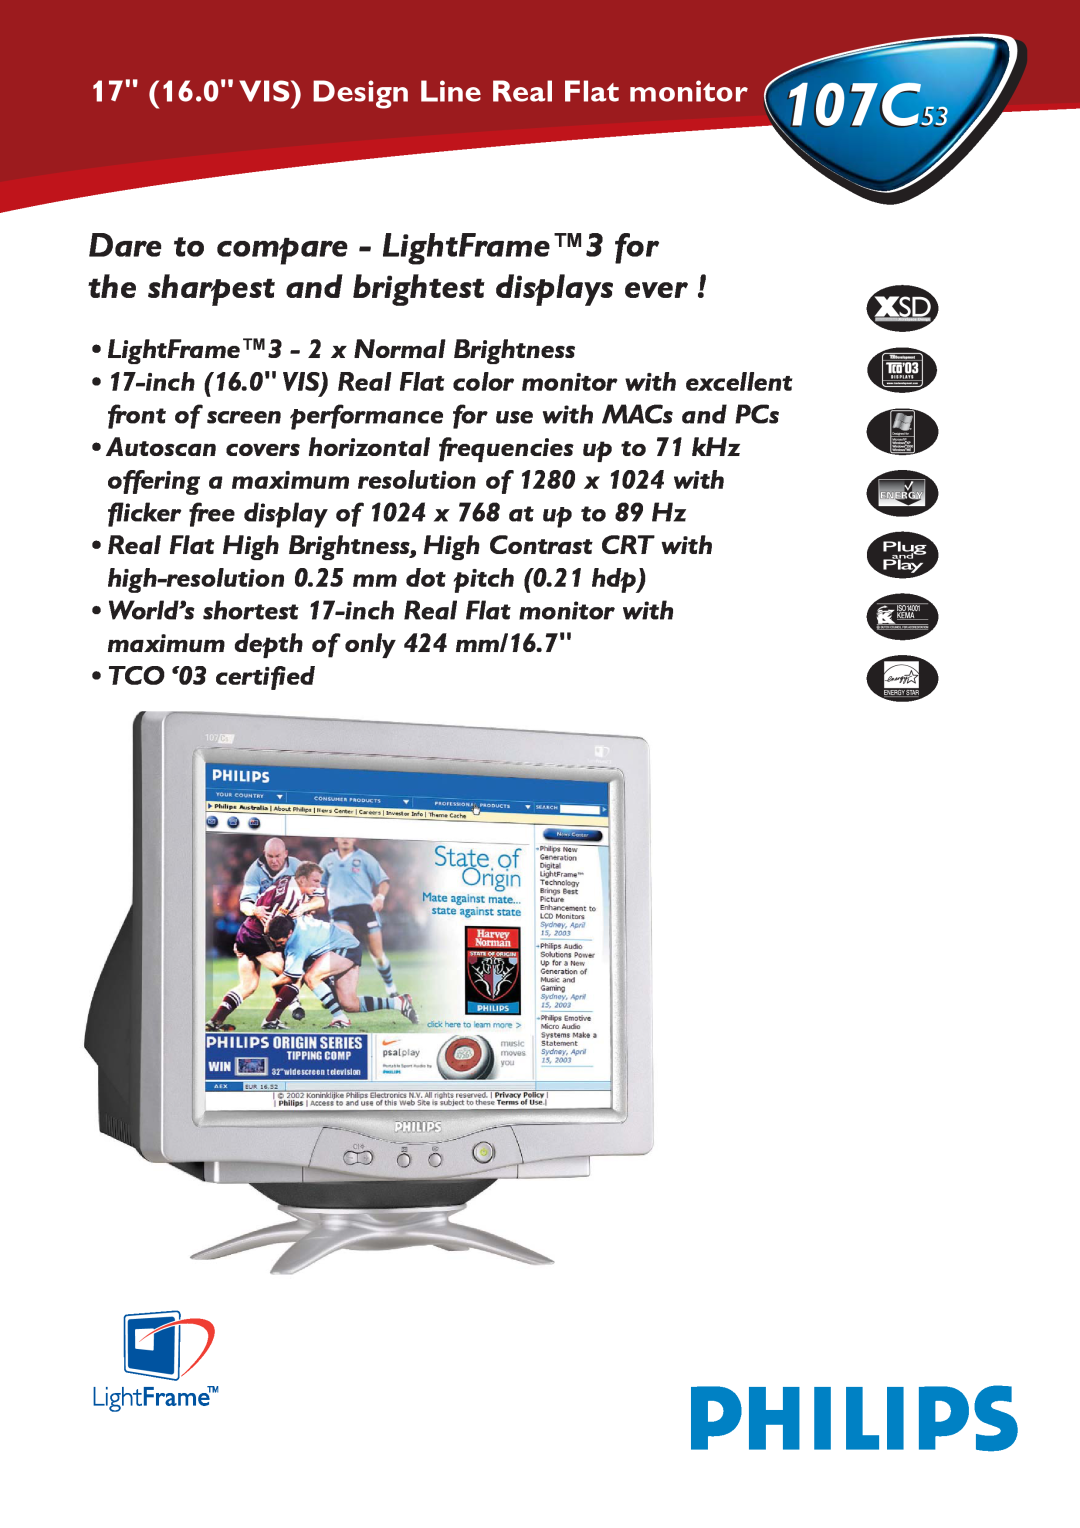 Philips 107C 53 manual 17 16.0 VIS Design Line Real Flat monitor 107C, LightFrame3 - 2 x Normal Brightness 